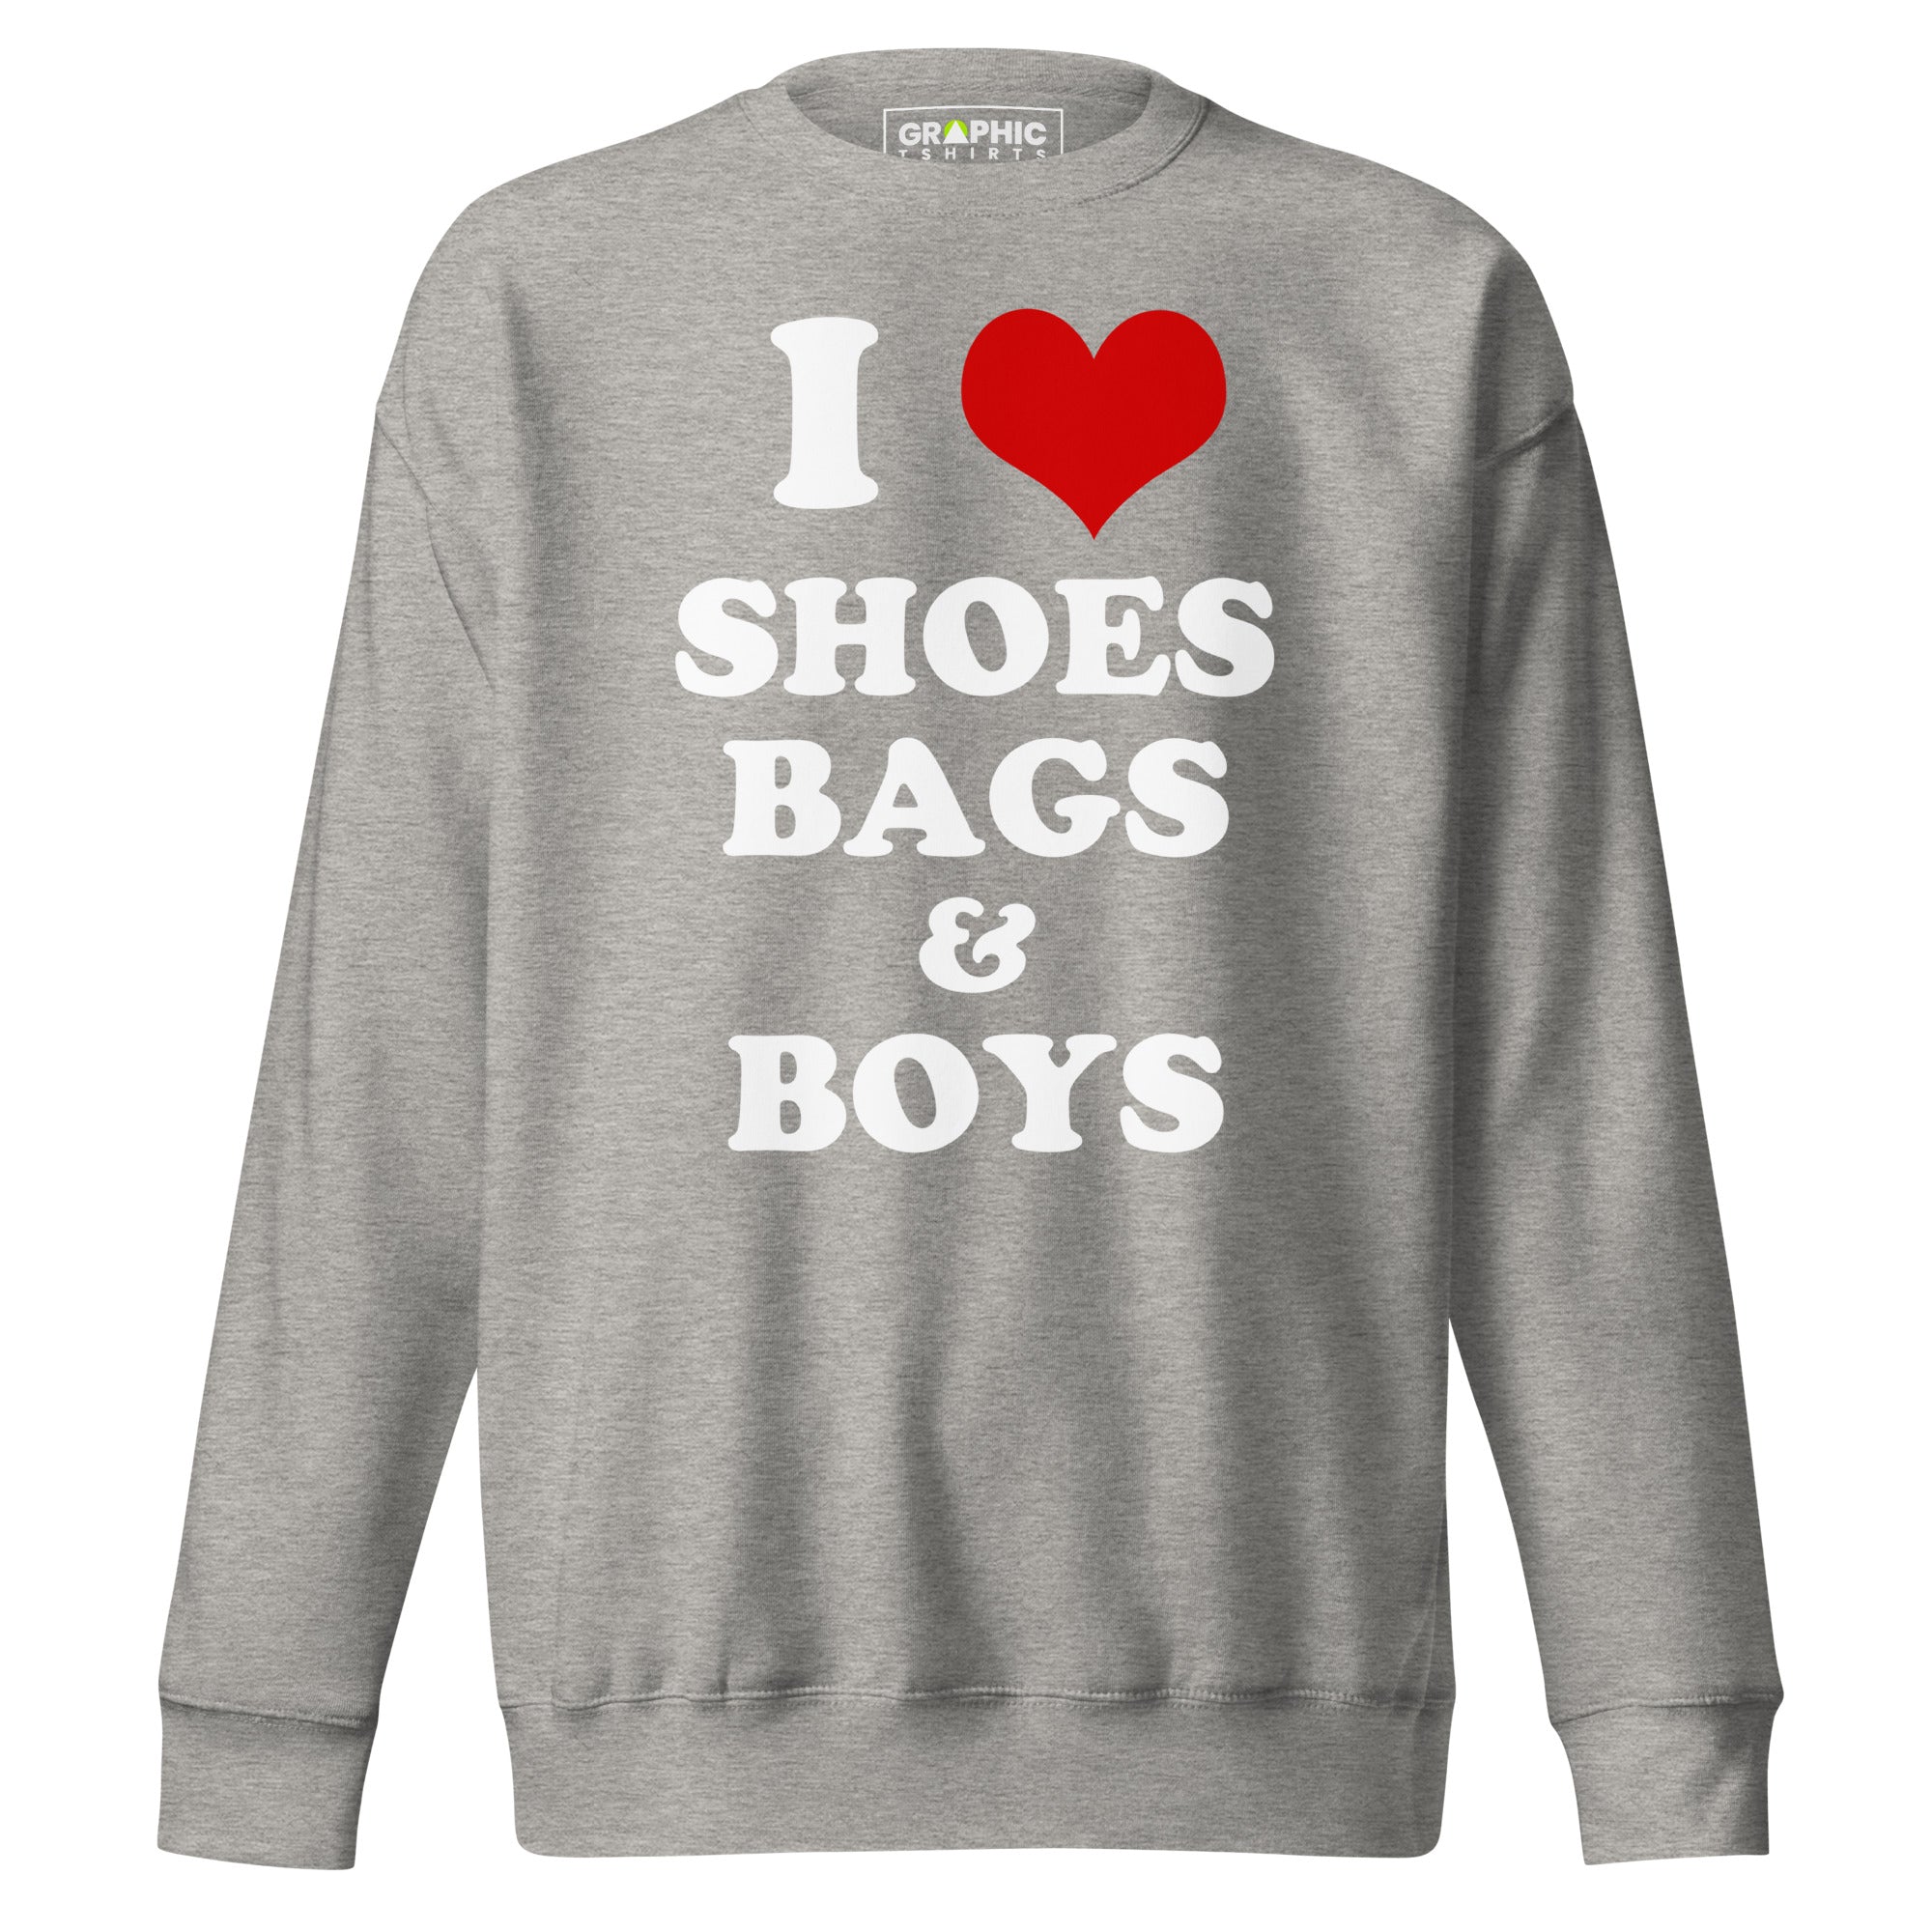 Women's Premium Sweatshirt - I Love Shoes Bags & Boys - GRAPHIC T-SHIRTS